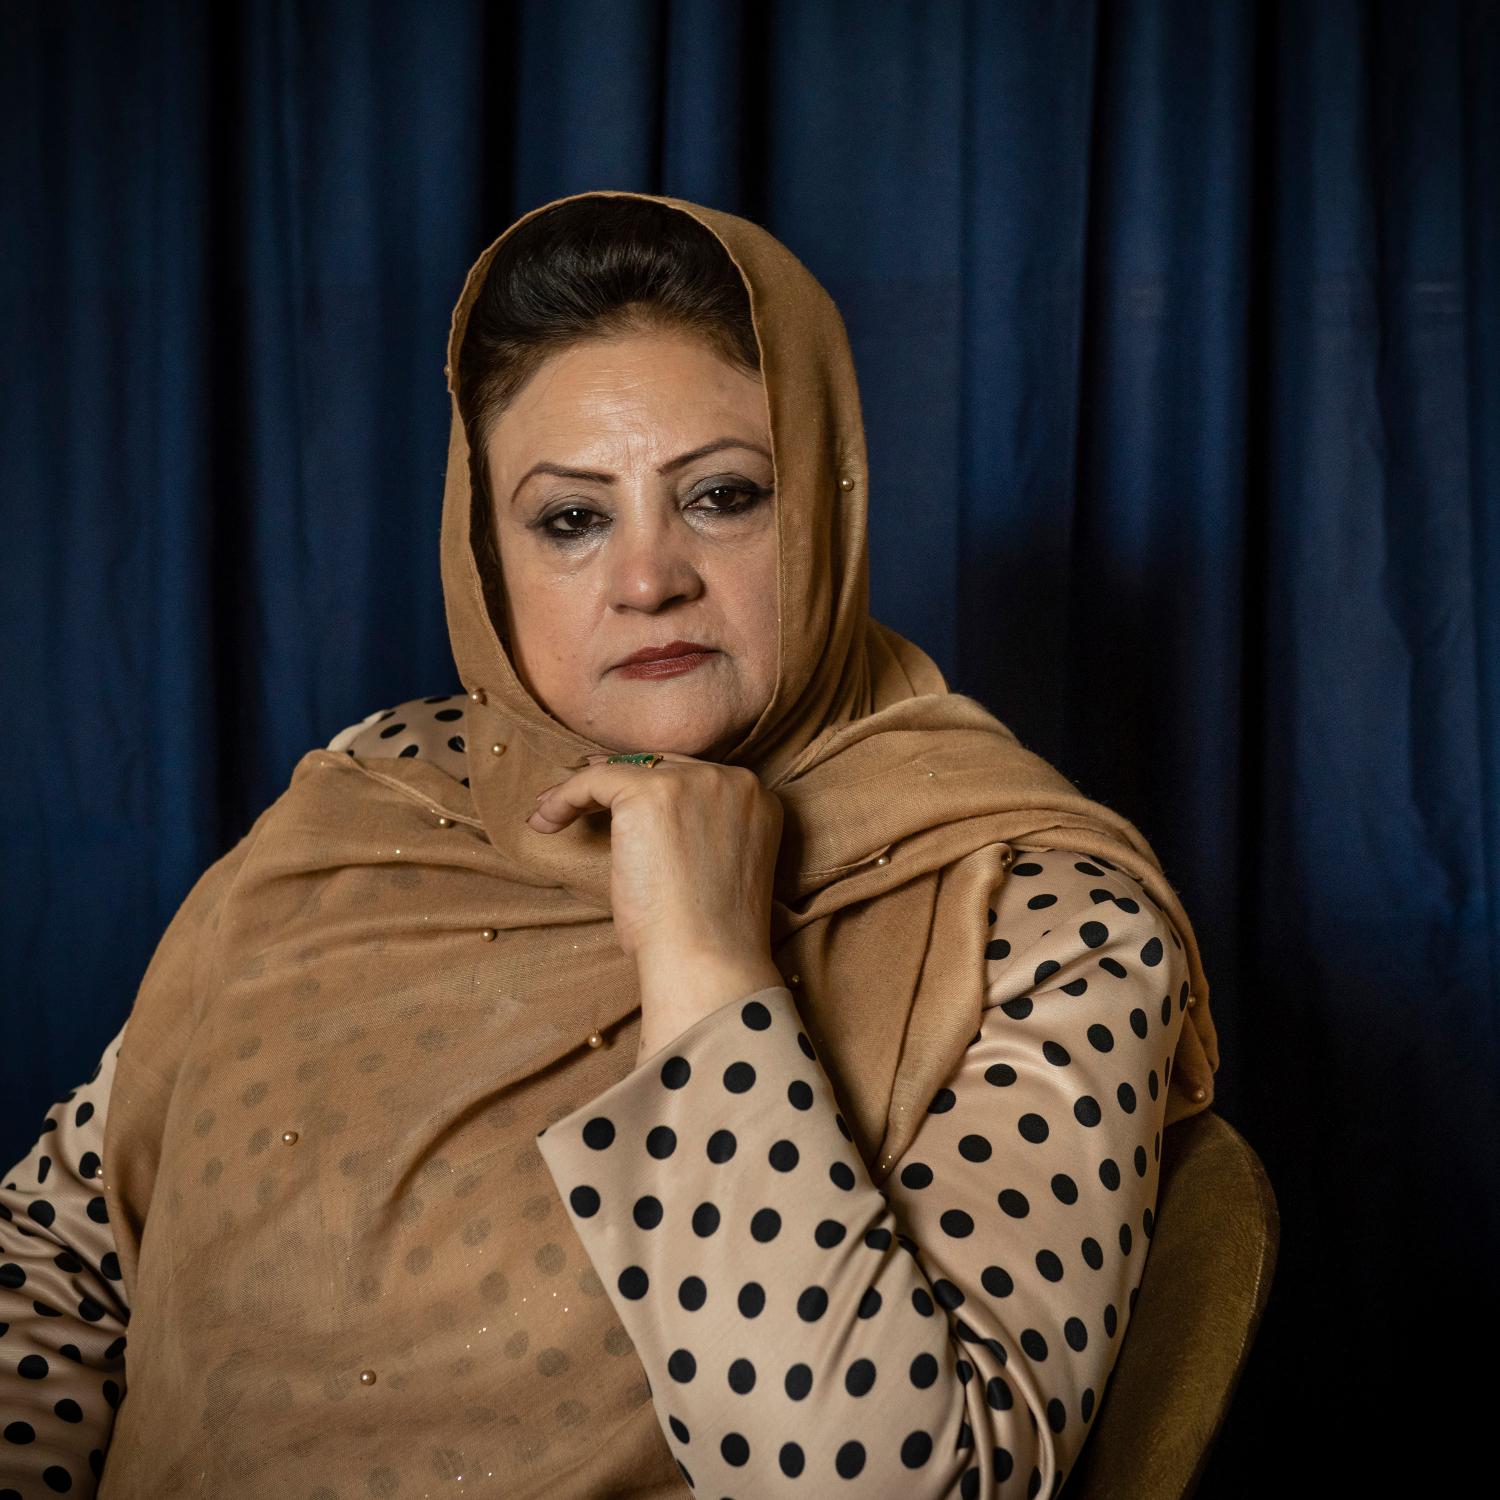 Afghan Women Demand to be Heard